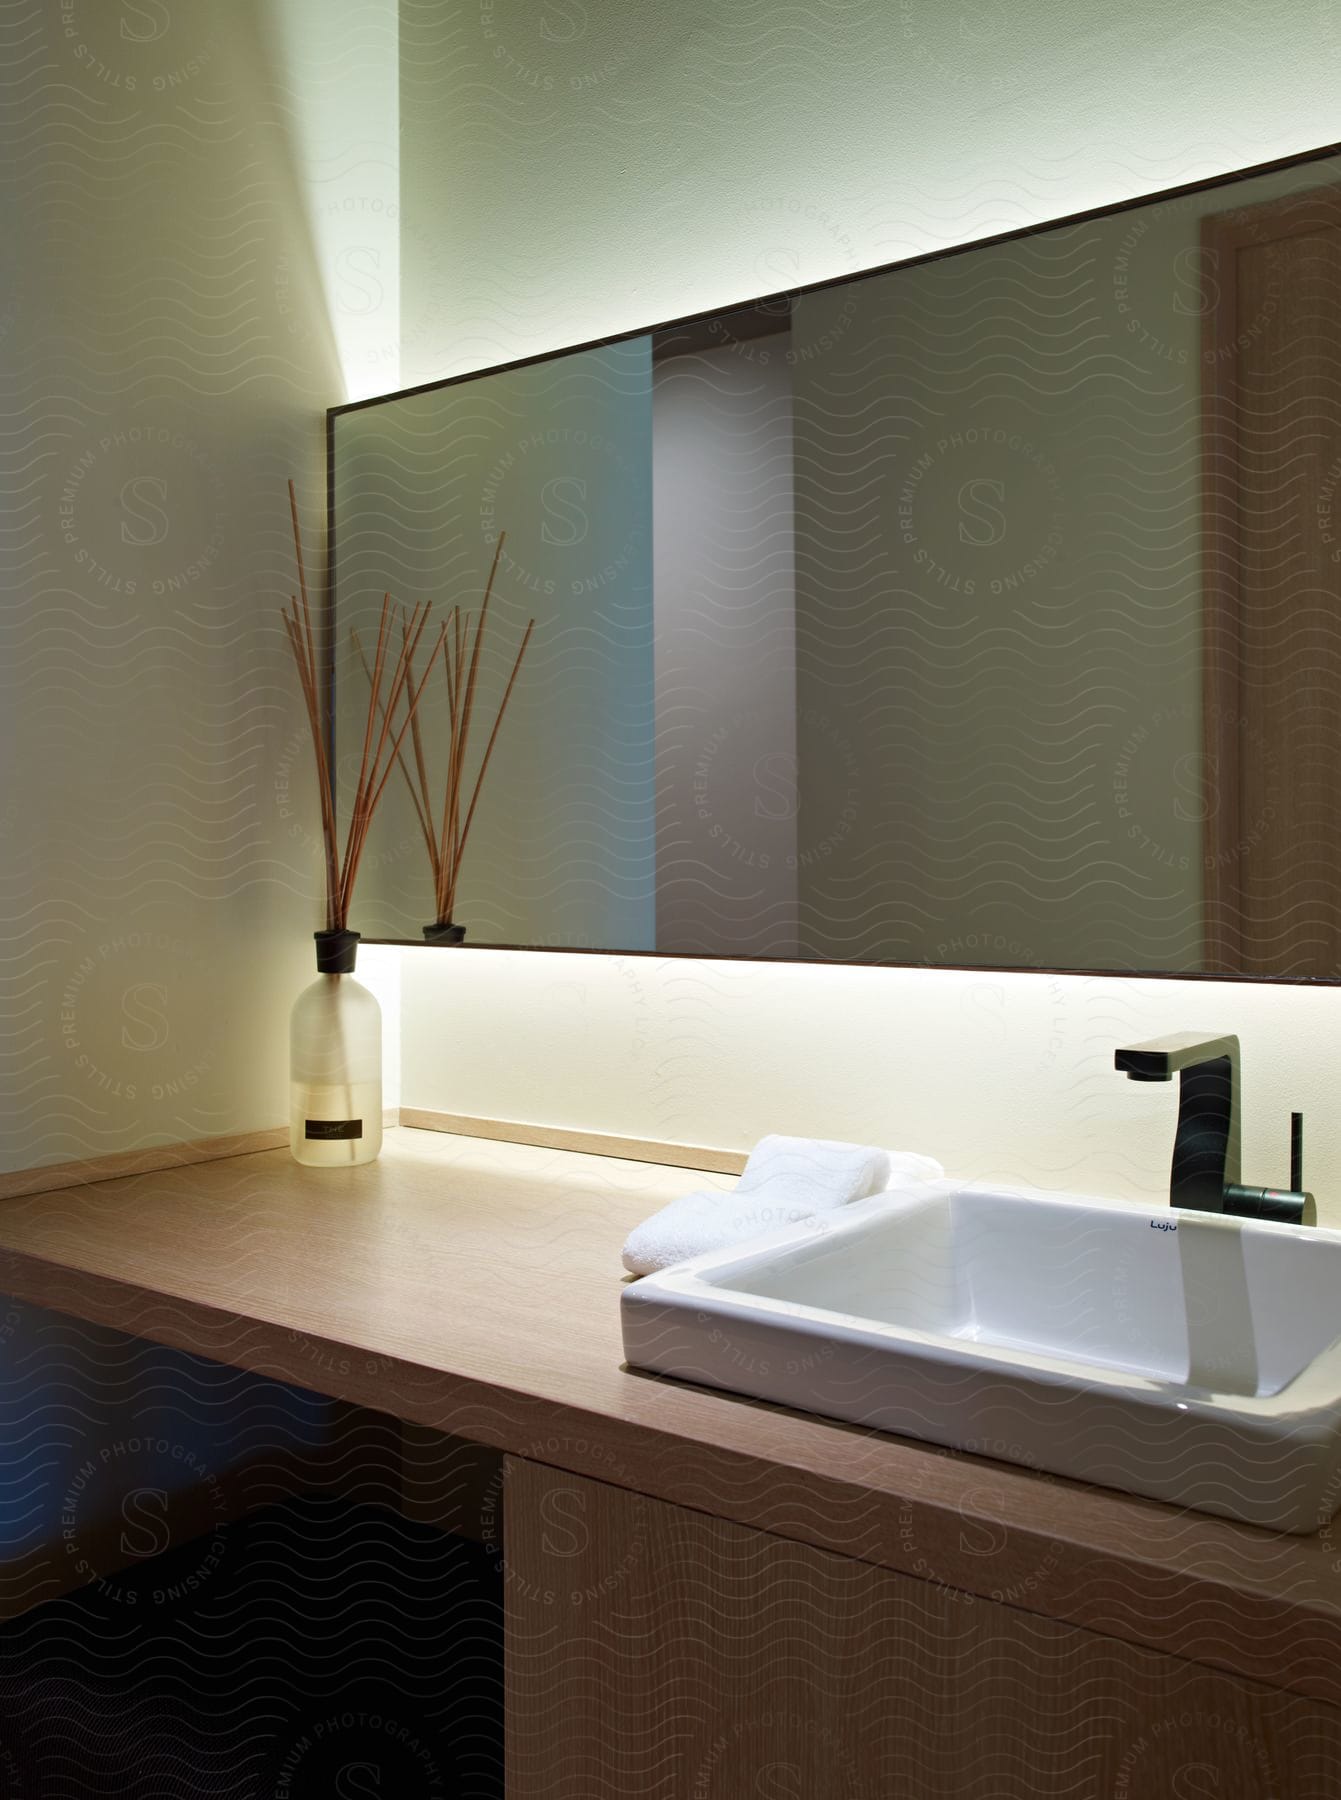 The interior design of a bathroom